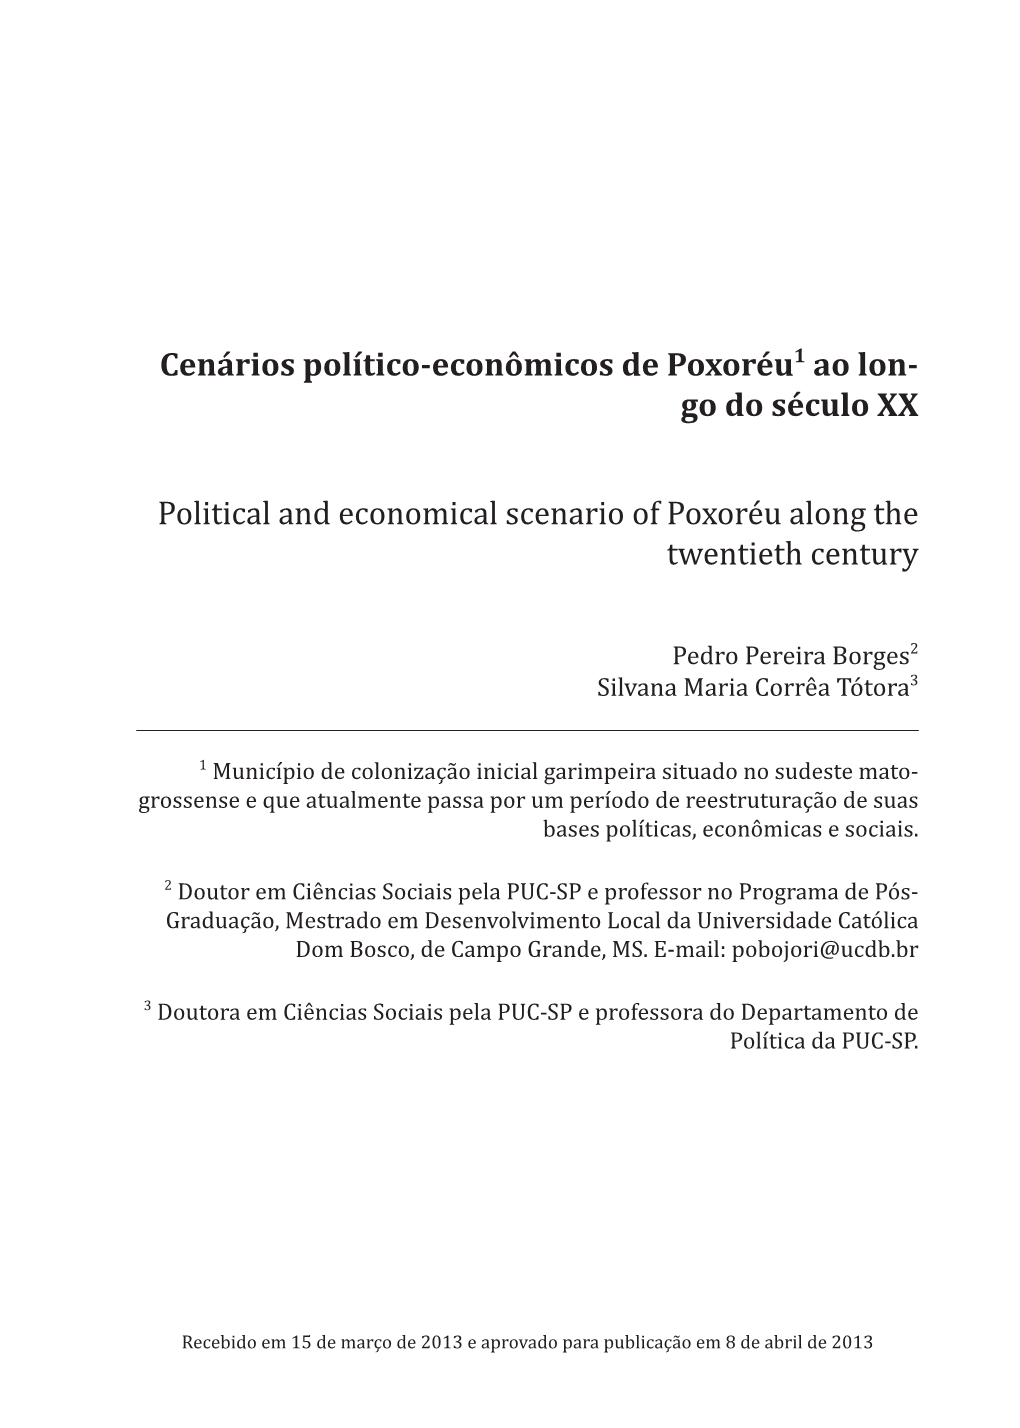 Go Do Século XX Political and Economical Scenario of Poxoréu